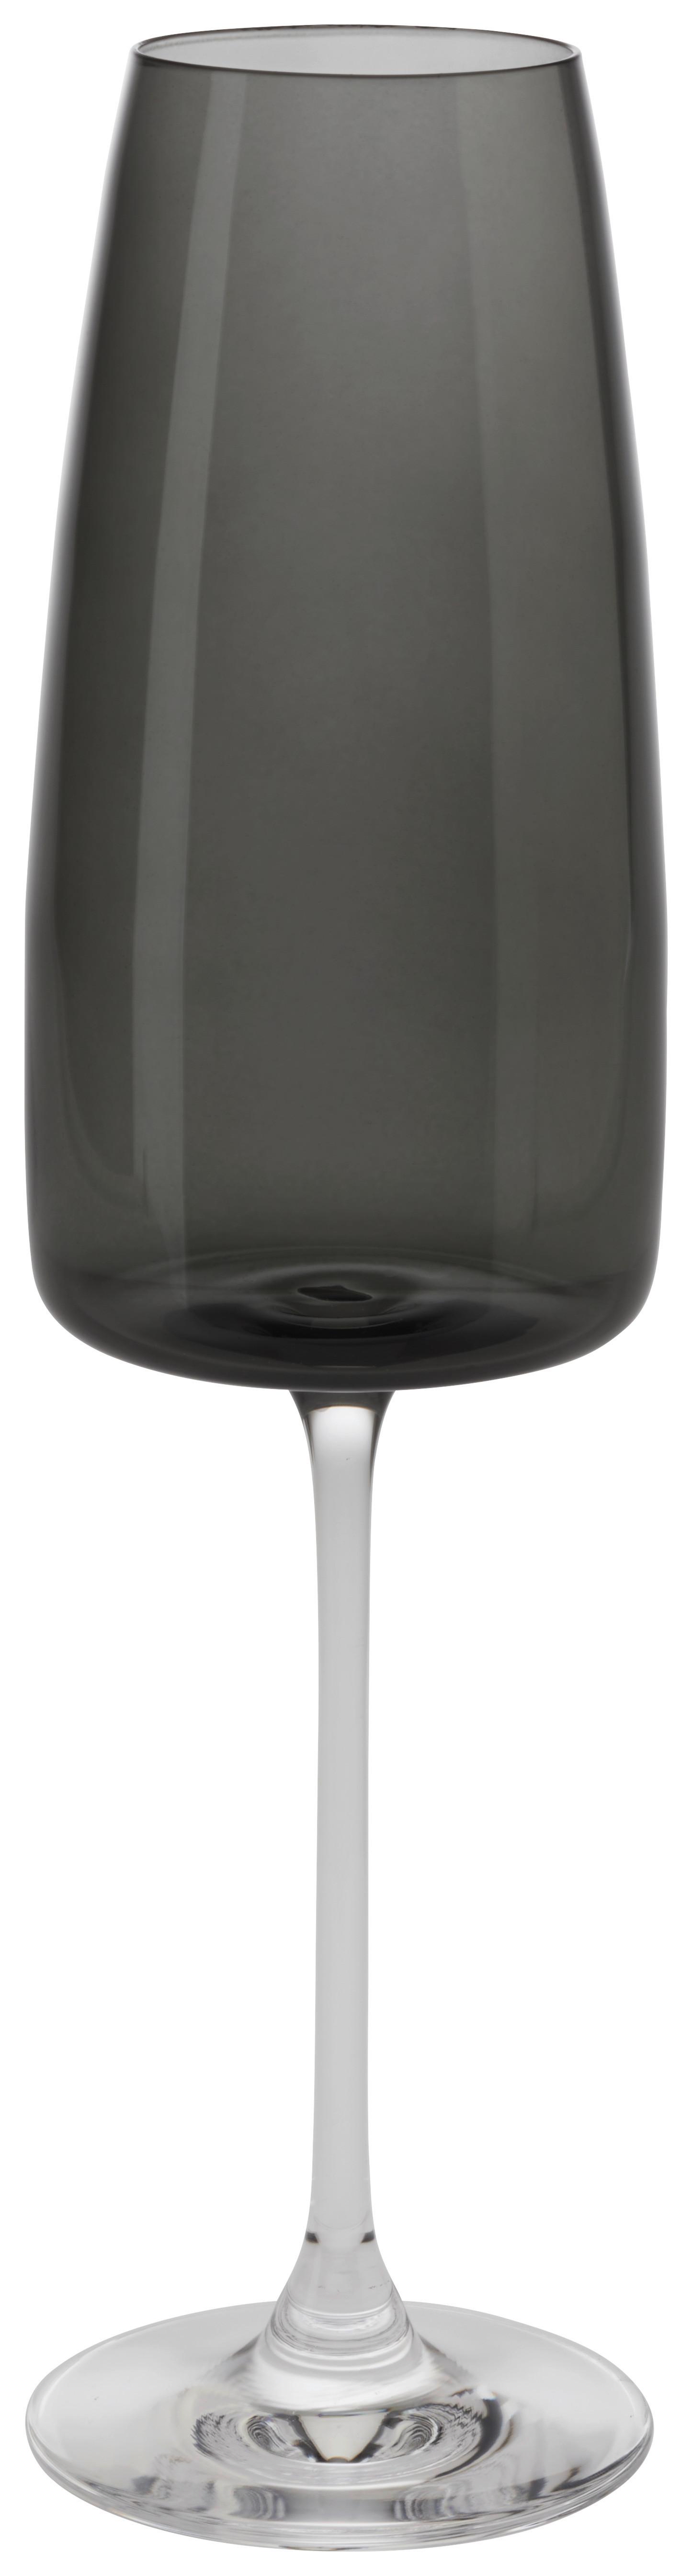 Sektglas Nicki in Schwarz Ø ca. 6,6cm - Schwarz, Modern, Glas (6,6/25cm) - Premium Living